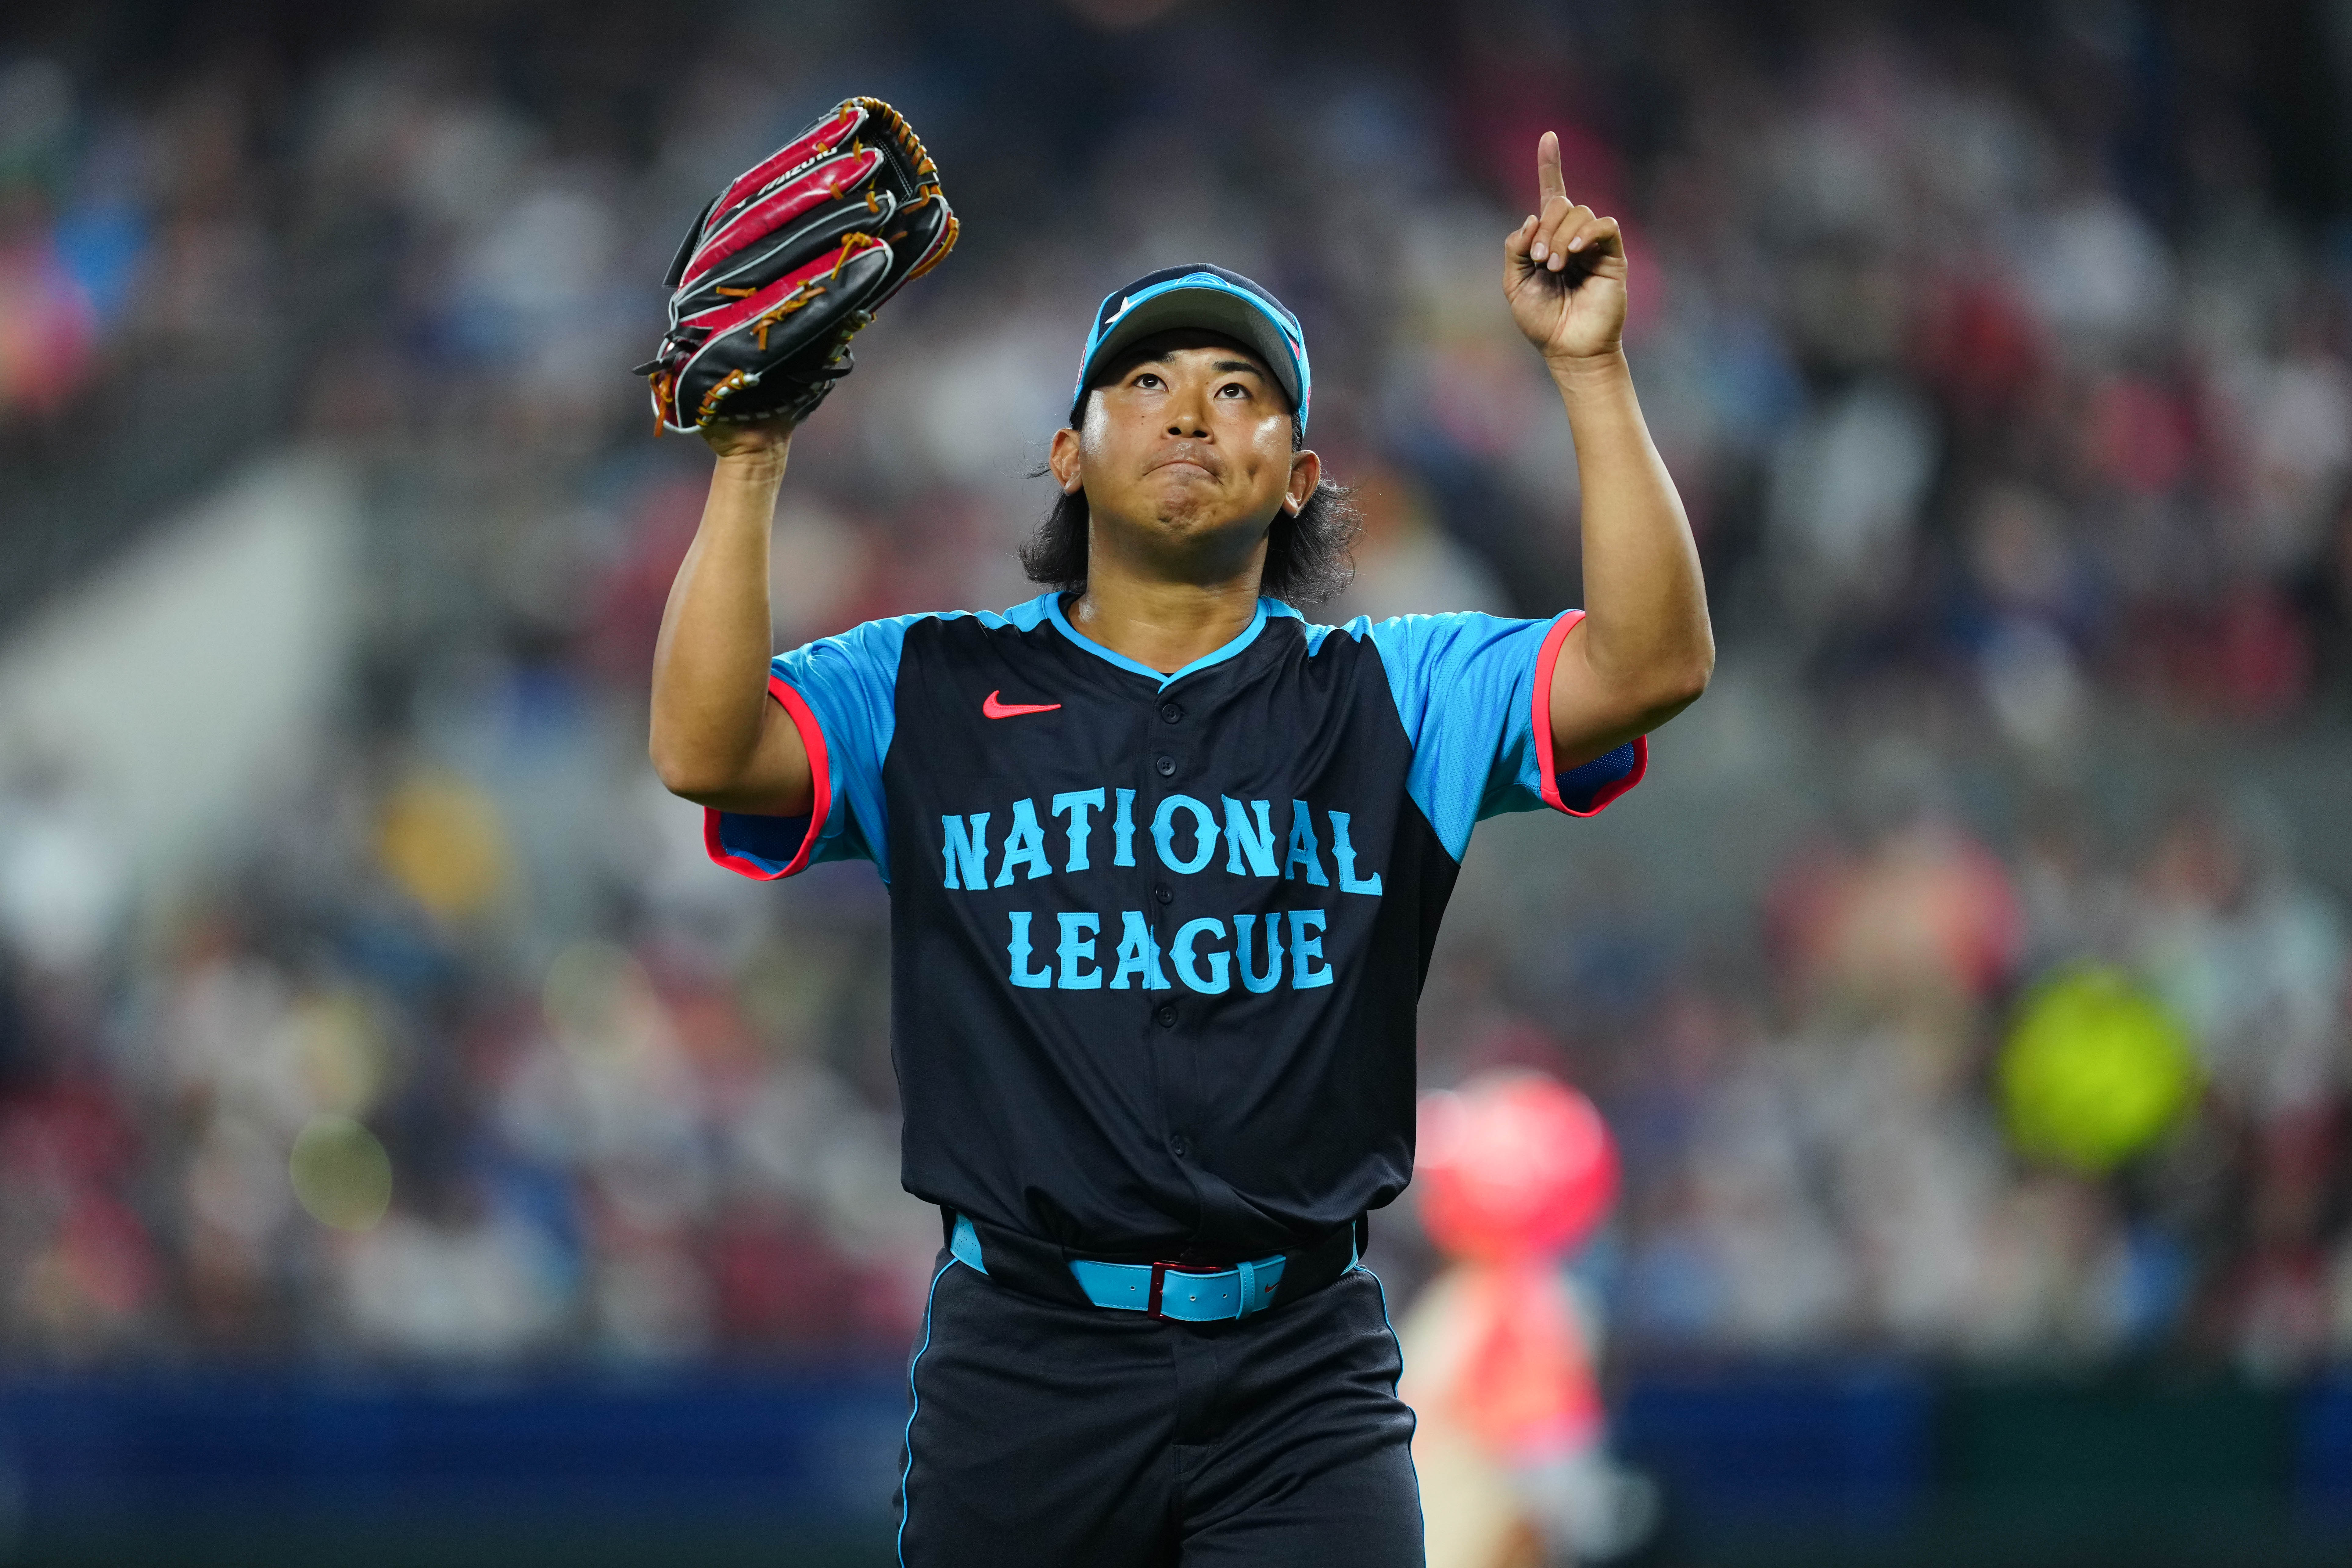 Shota Imanaga dedicates his All-Star hat to the Baseball Hall of Fame. Here's why